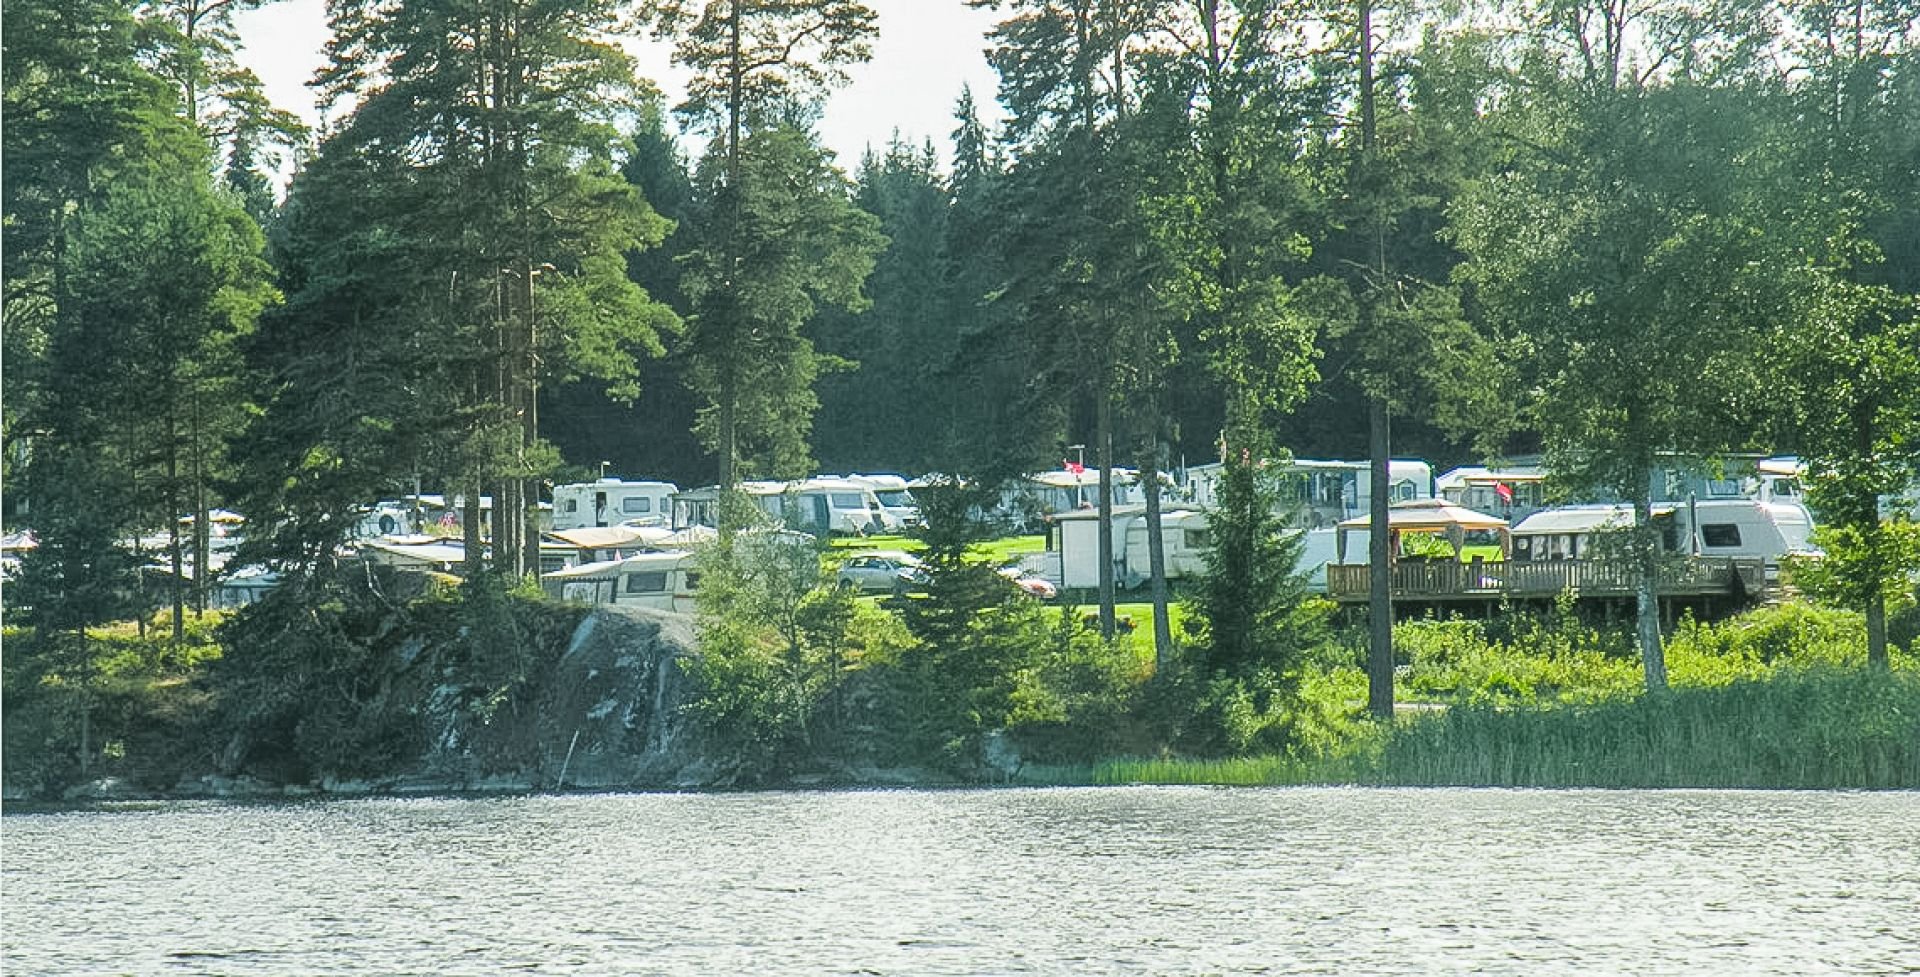 Elovsbyn Camp & Canoe